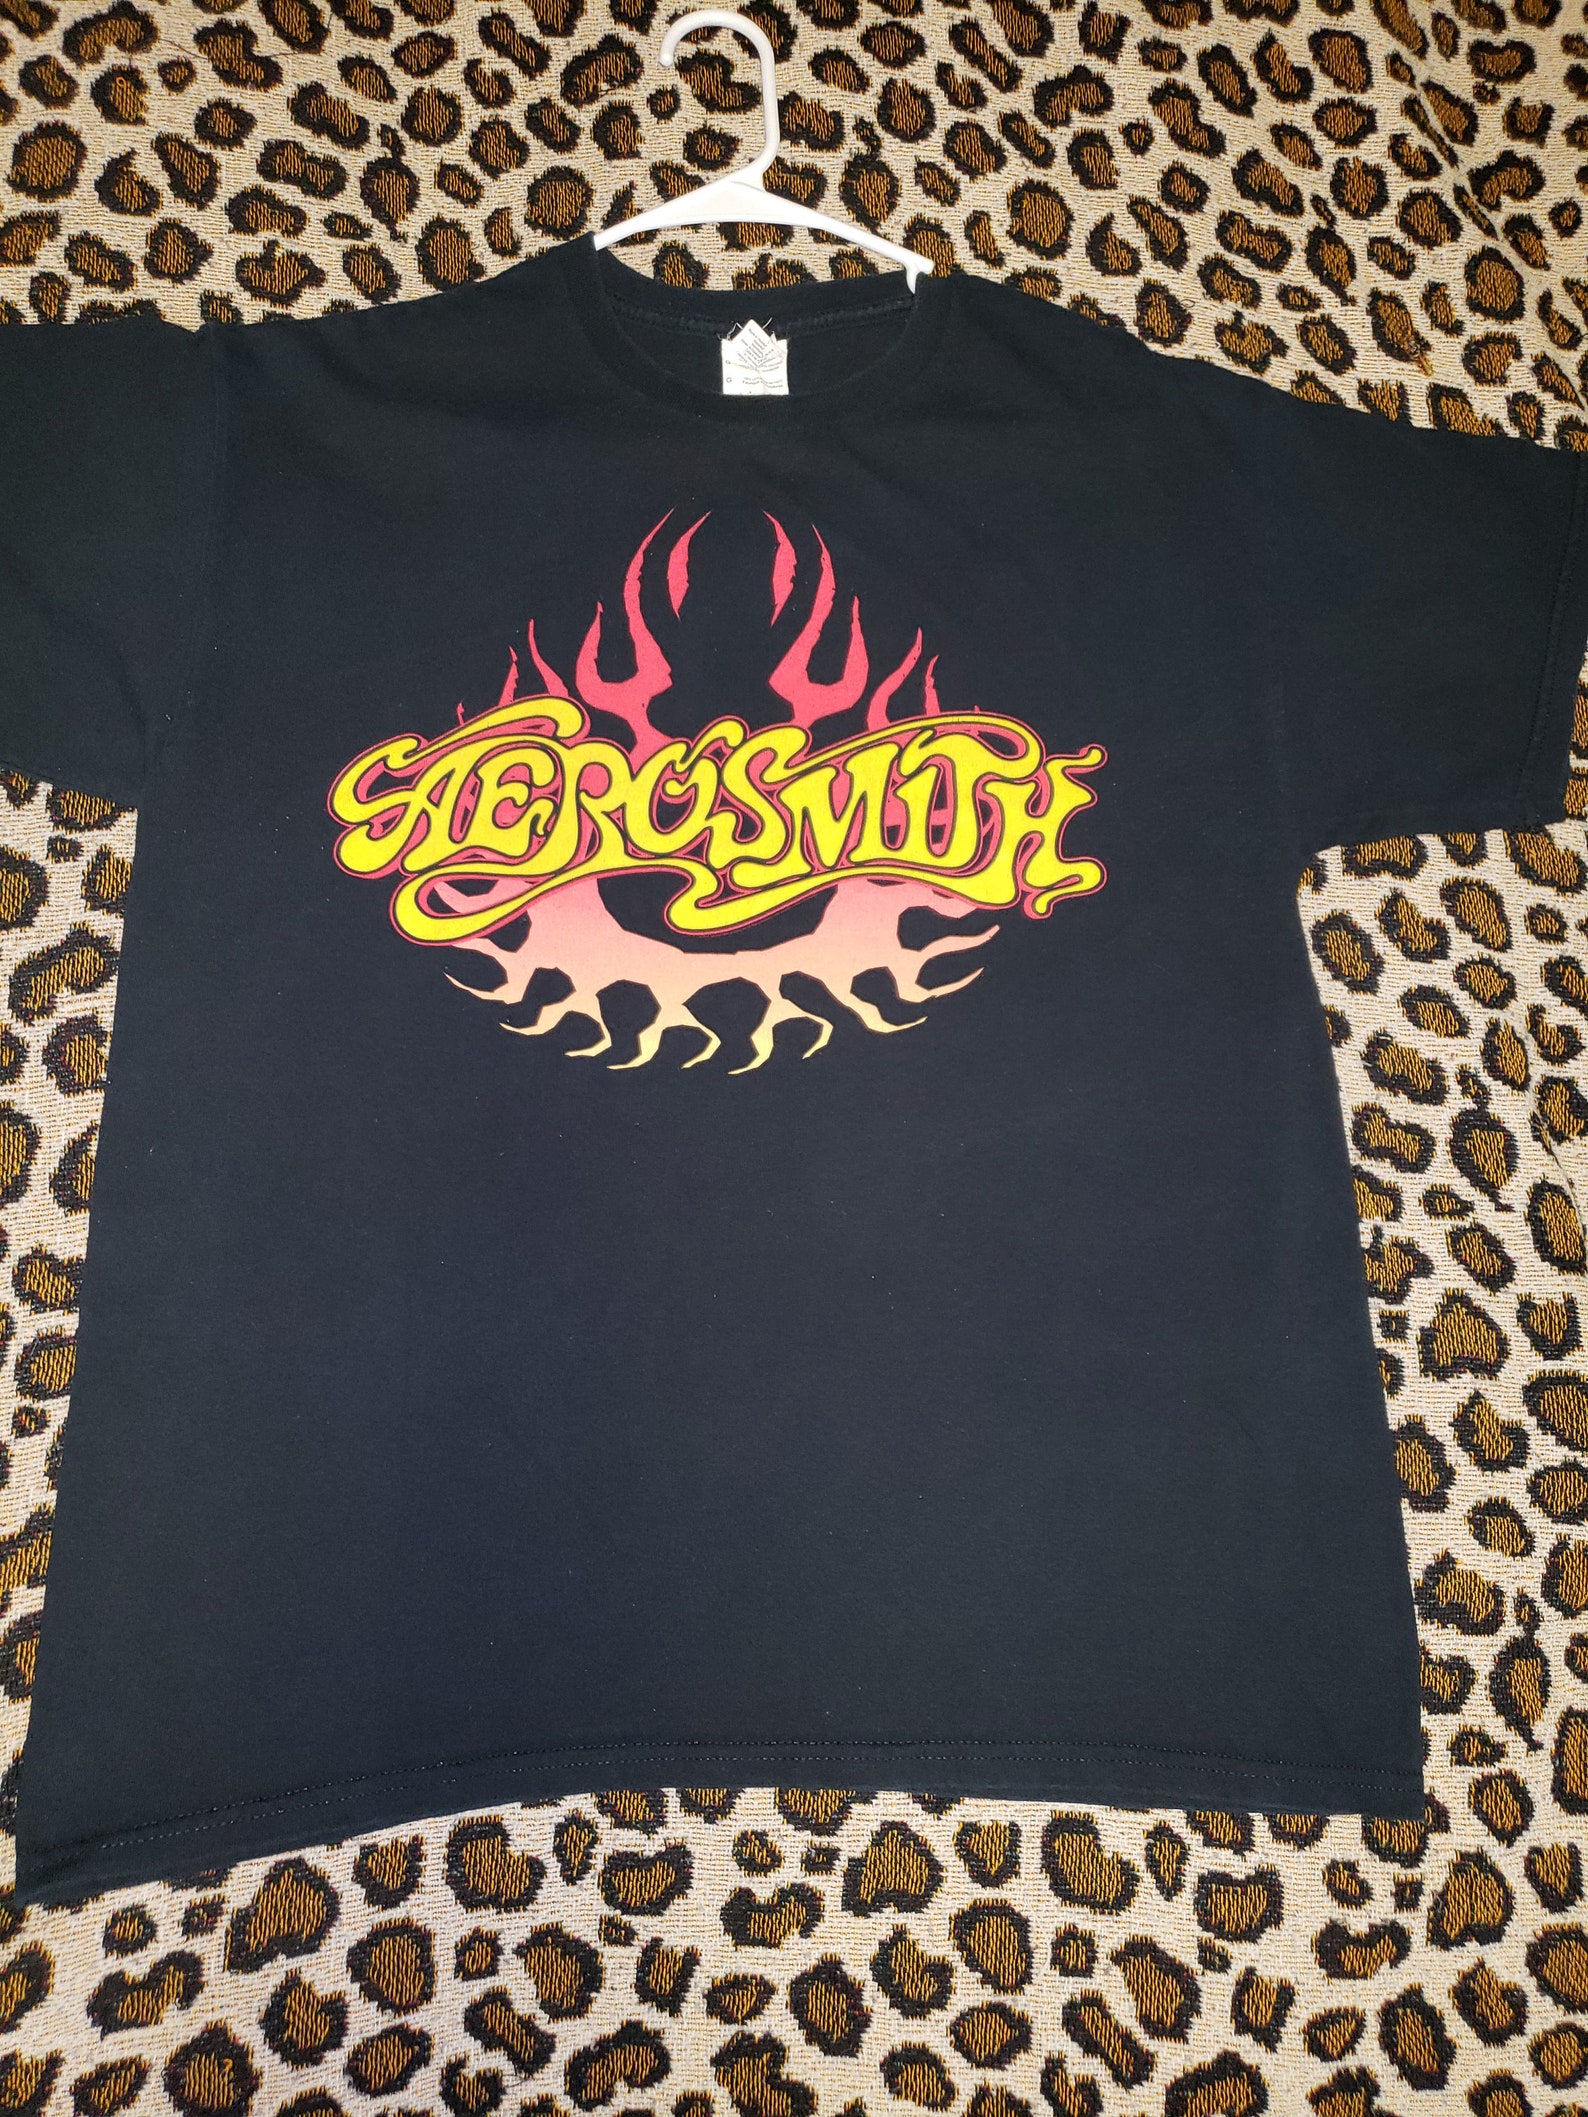 AEROSMITH 1990s Vintage Rock T Shirt | Etsy